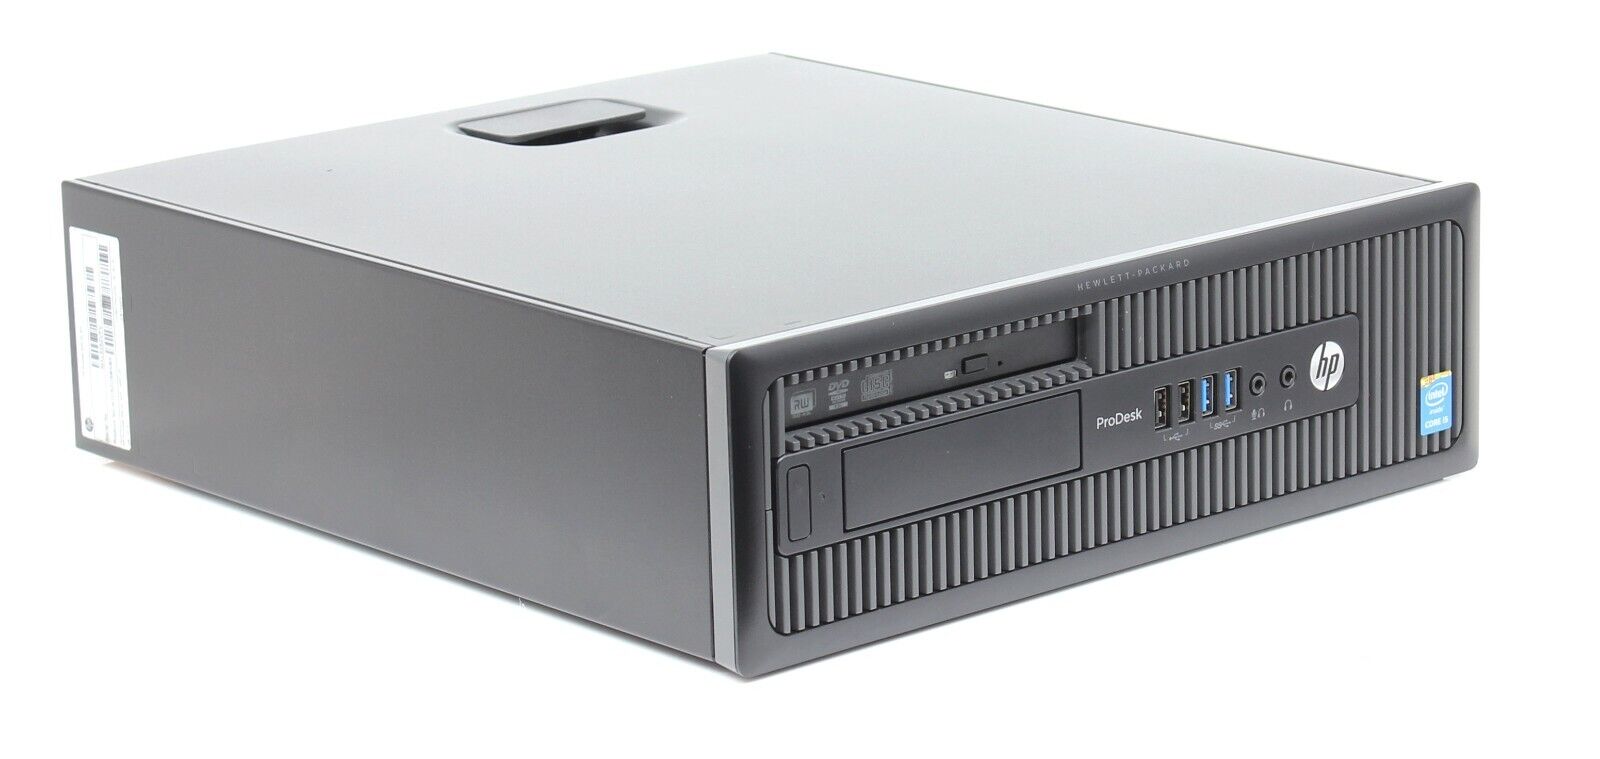 Linux Ubuntu Desktop Computer, PC: 3.20GHz, 128GB SSD, 500GB HDD, 32GB RAM, DVD